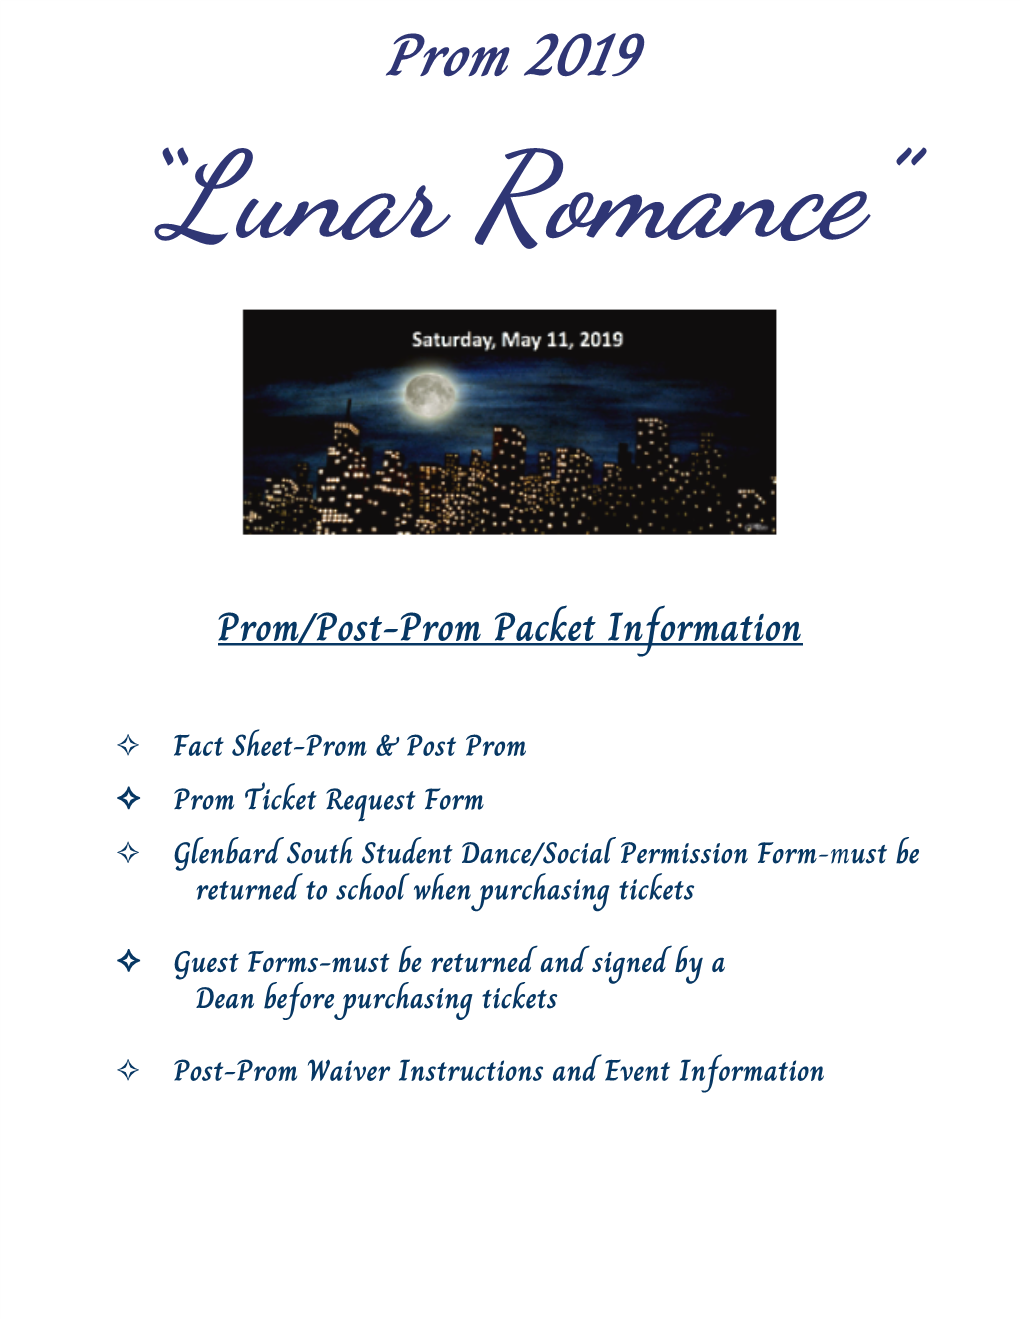 Prom 2019 “Lunar Romance”